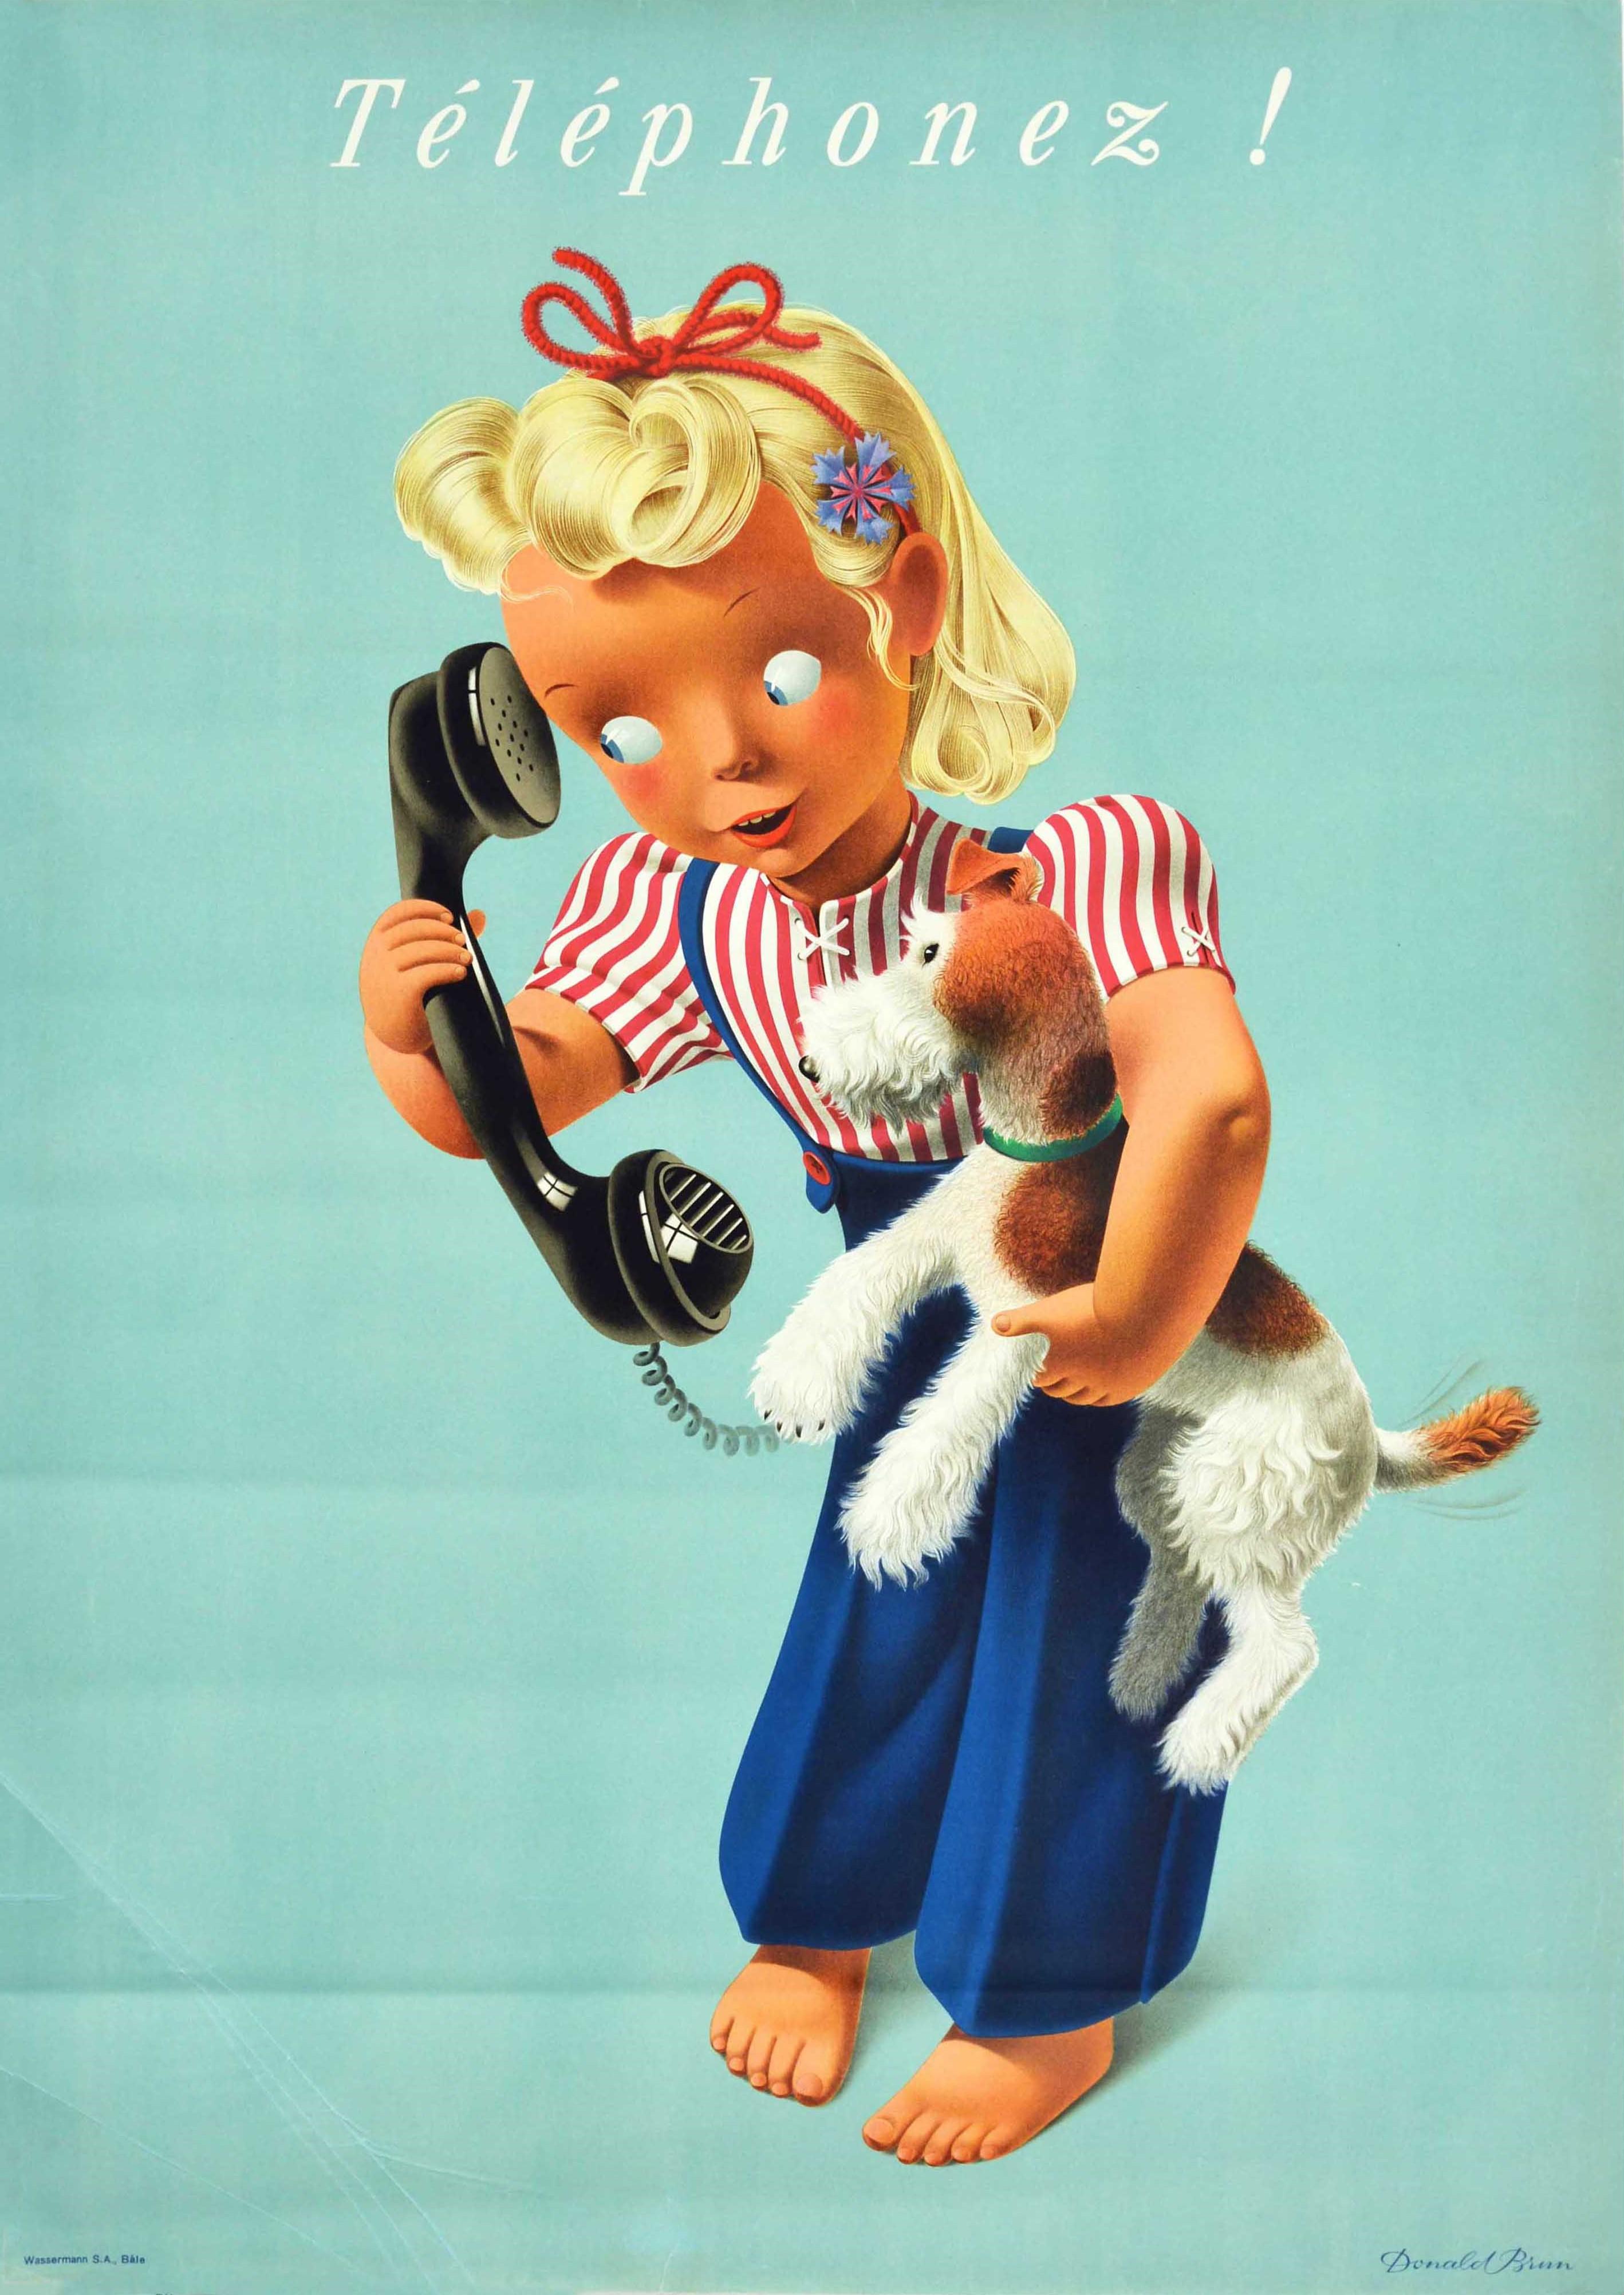 Donald Brun Print - Original Vintage Poster Telephonez! Swiss Telecom Girl And Dog Advertising Art